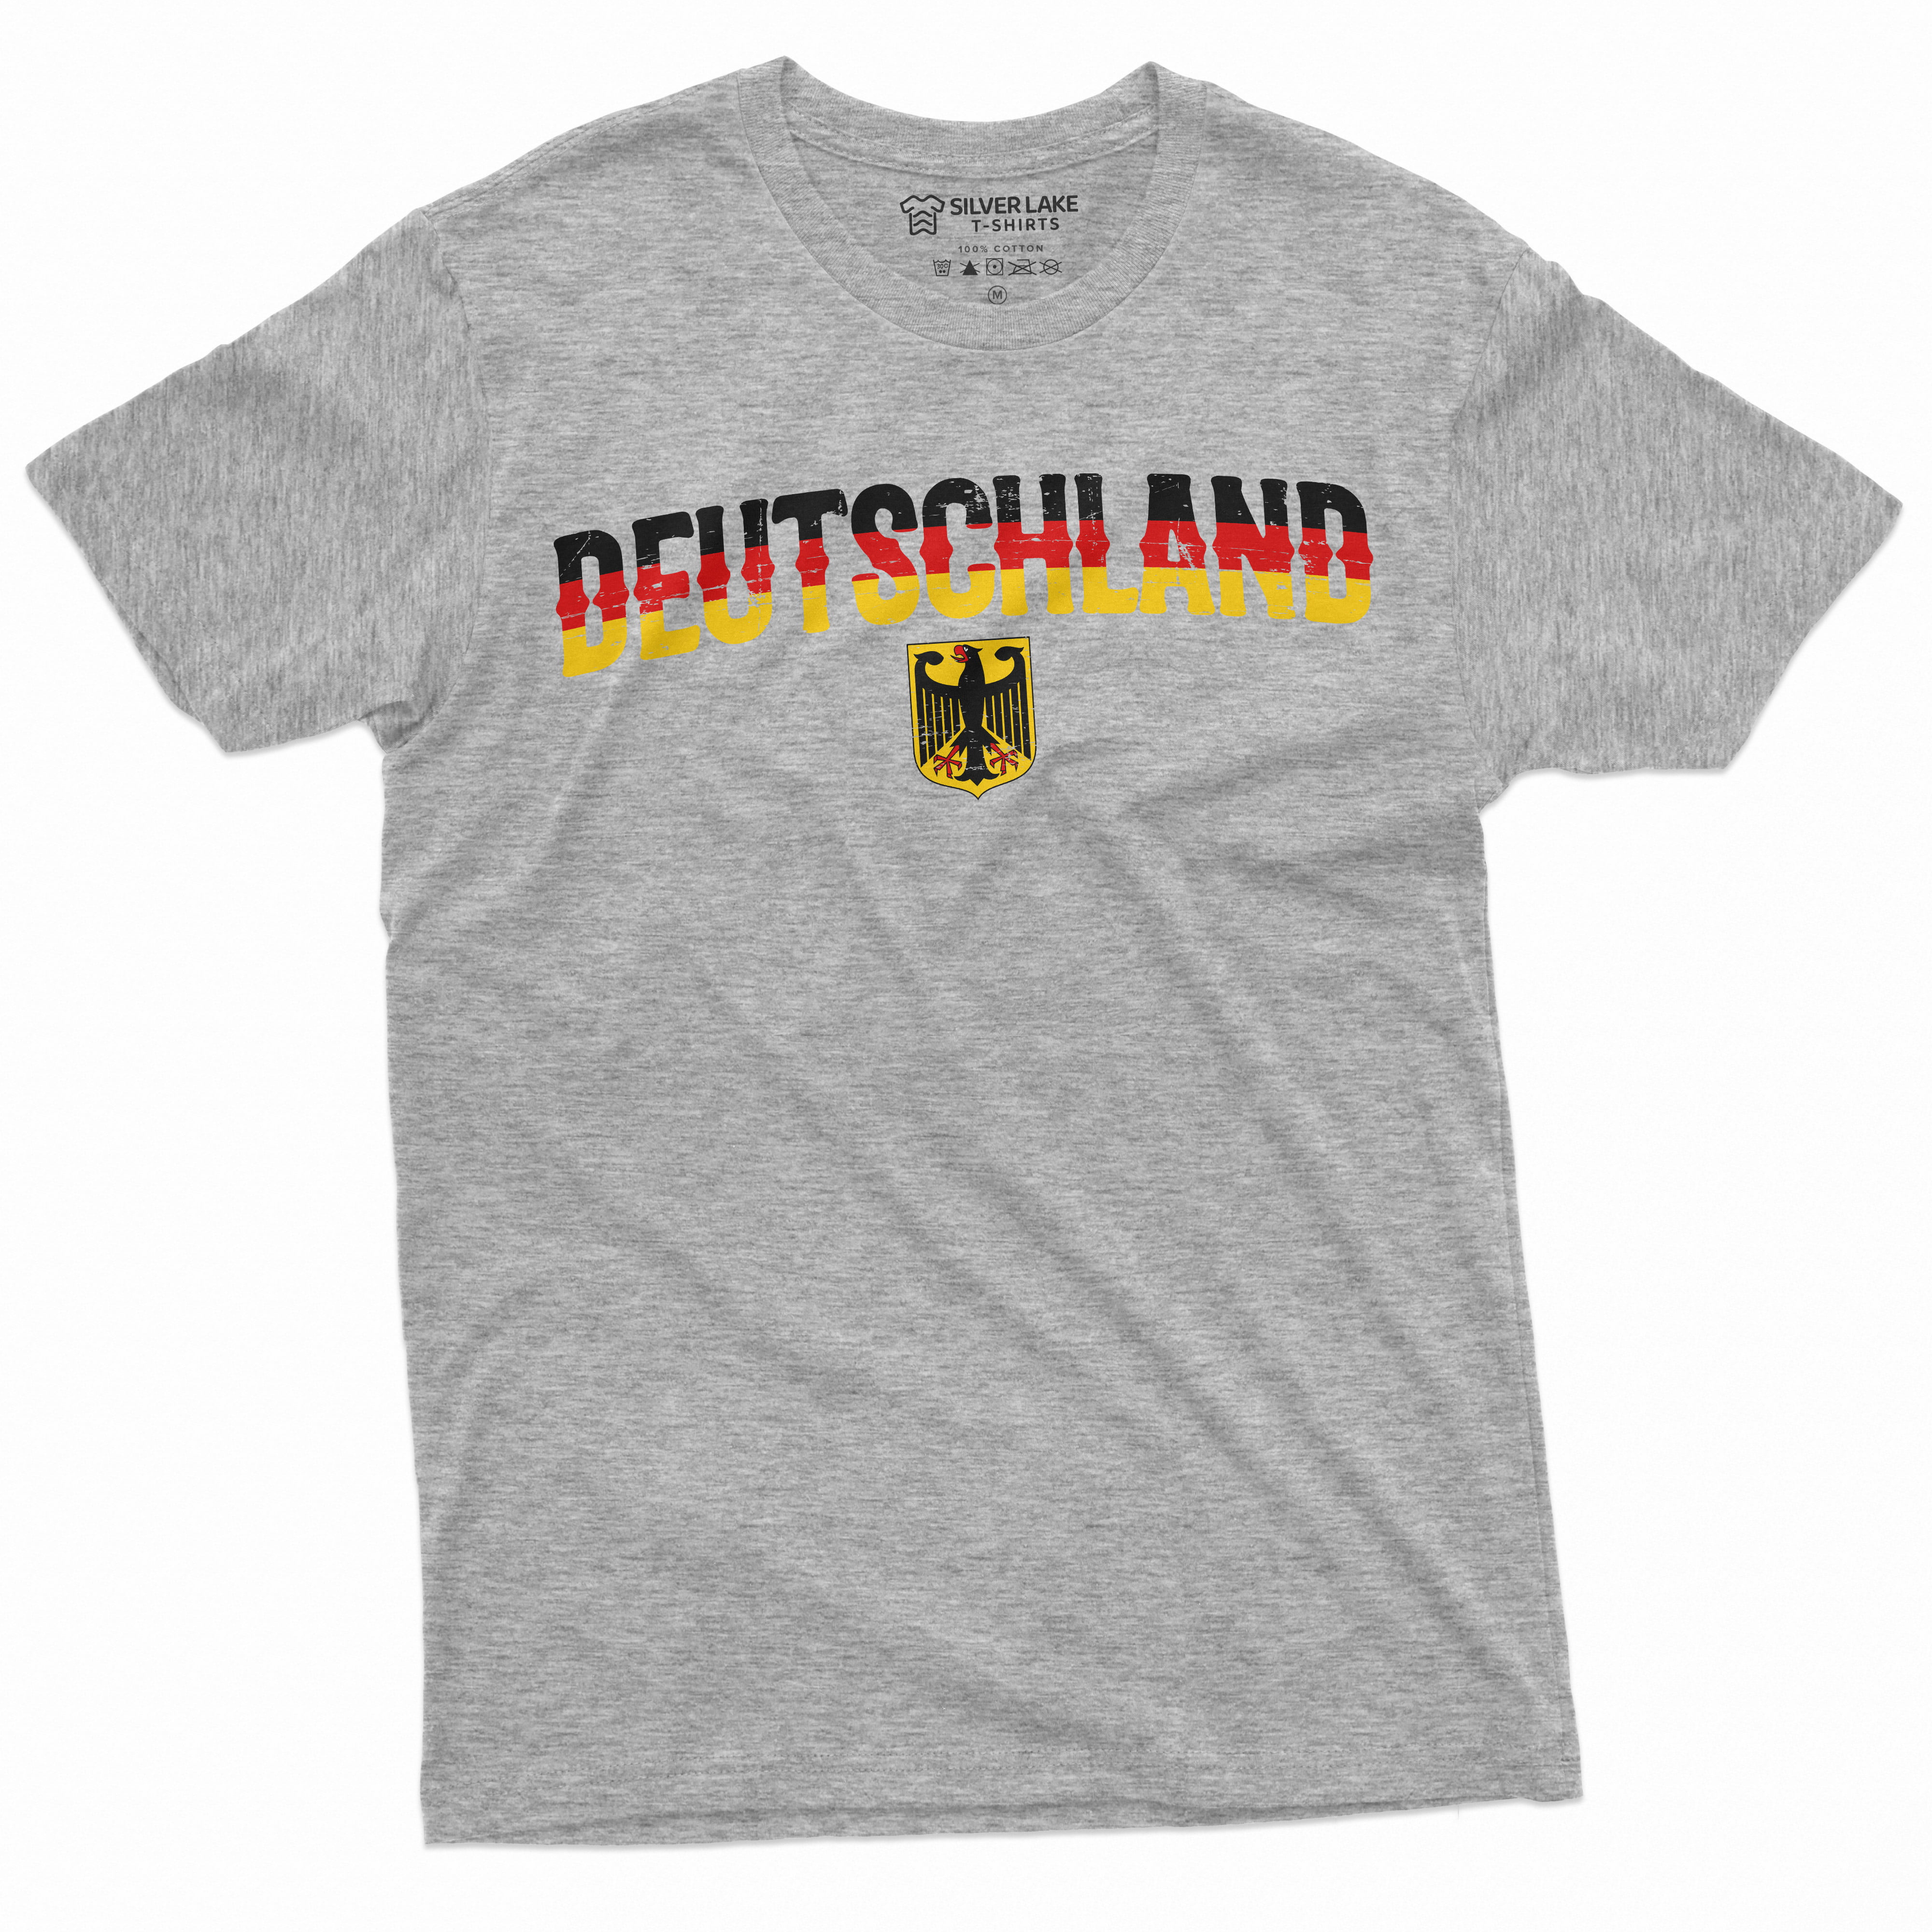 Men'S Germany T-Shirt Deutschland Patriotic Tshirt German Flag Tee Shirt  (X-Large Grey)